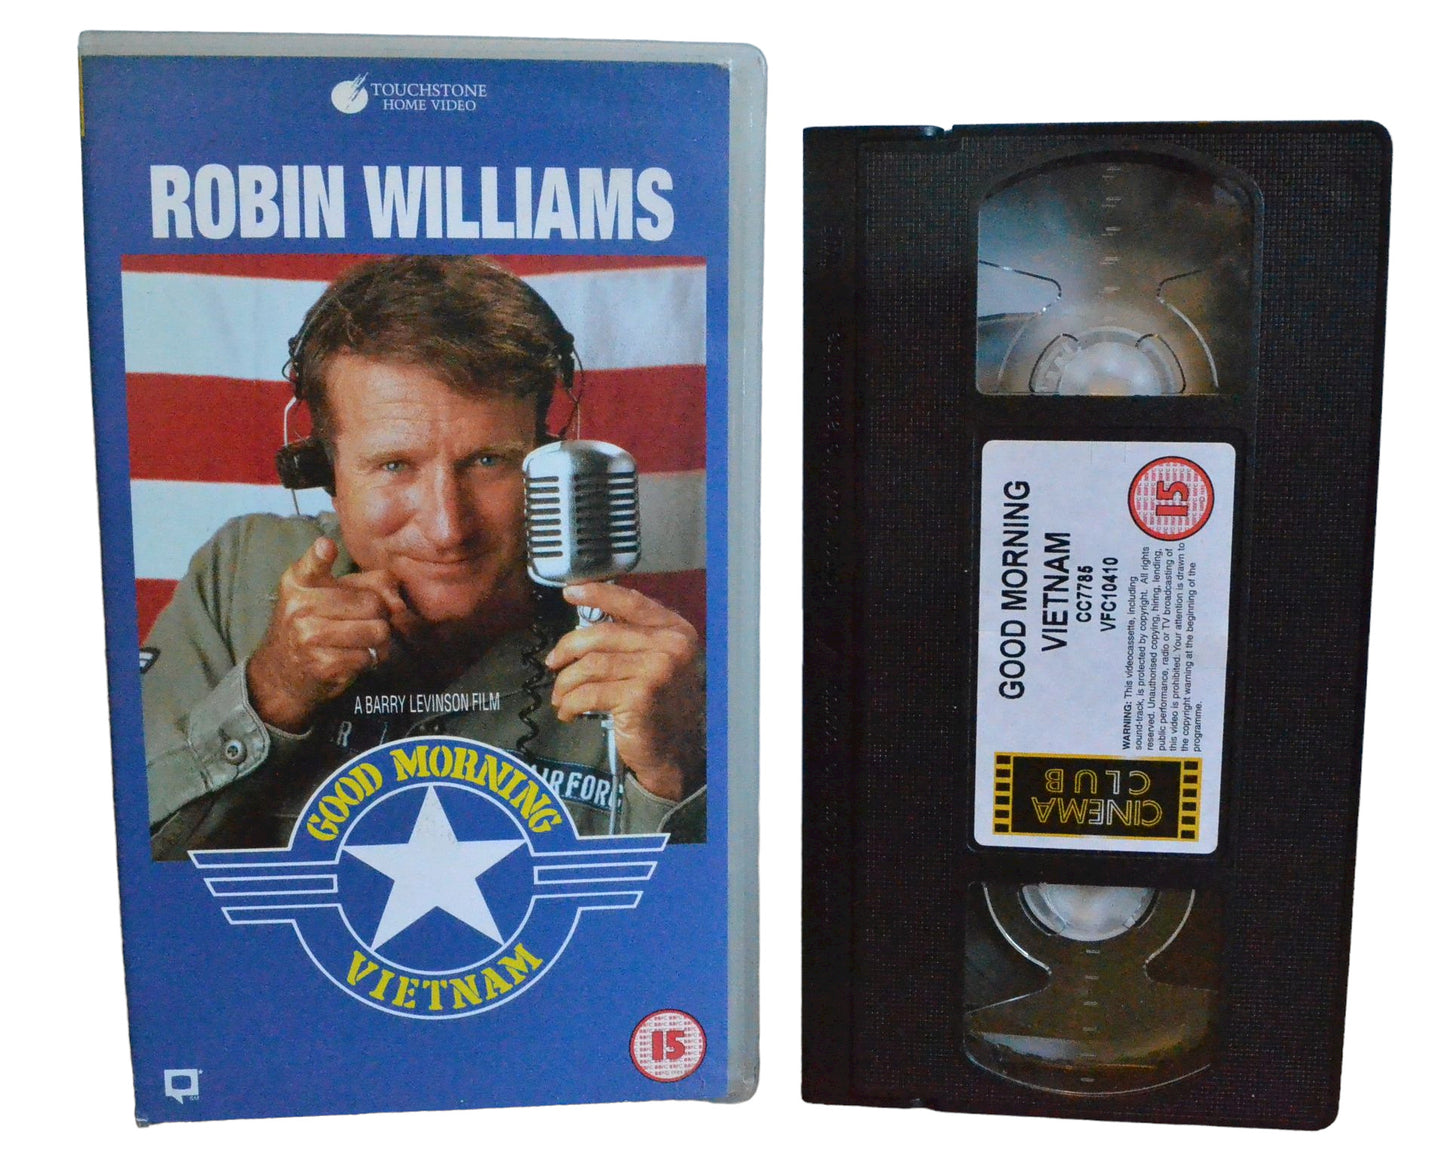 Good Morning - Vietnam - Robin Williams - Cinema Club - Comedy - Pal - VHS-